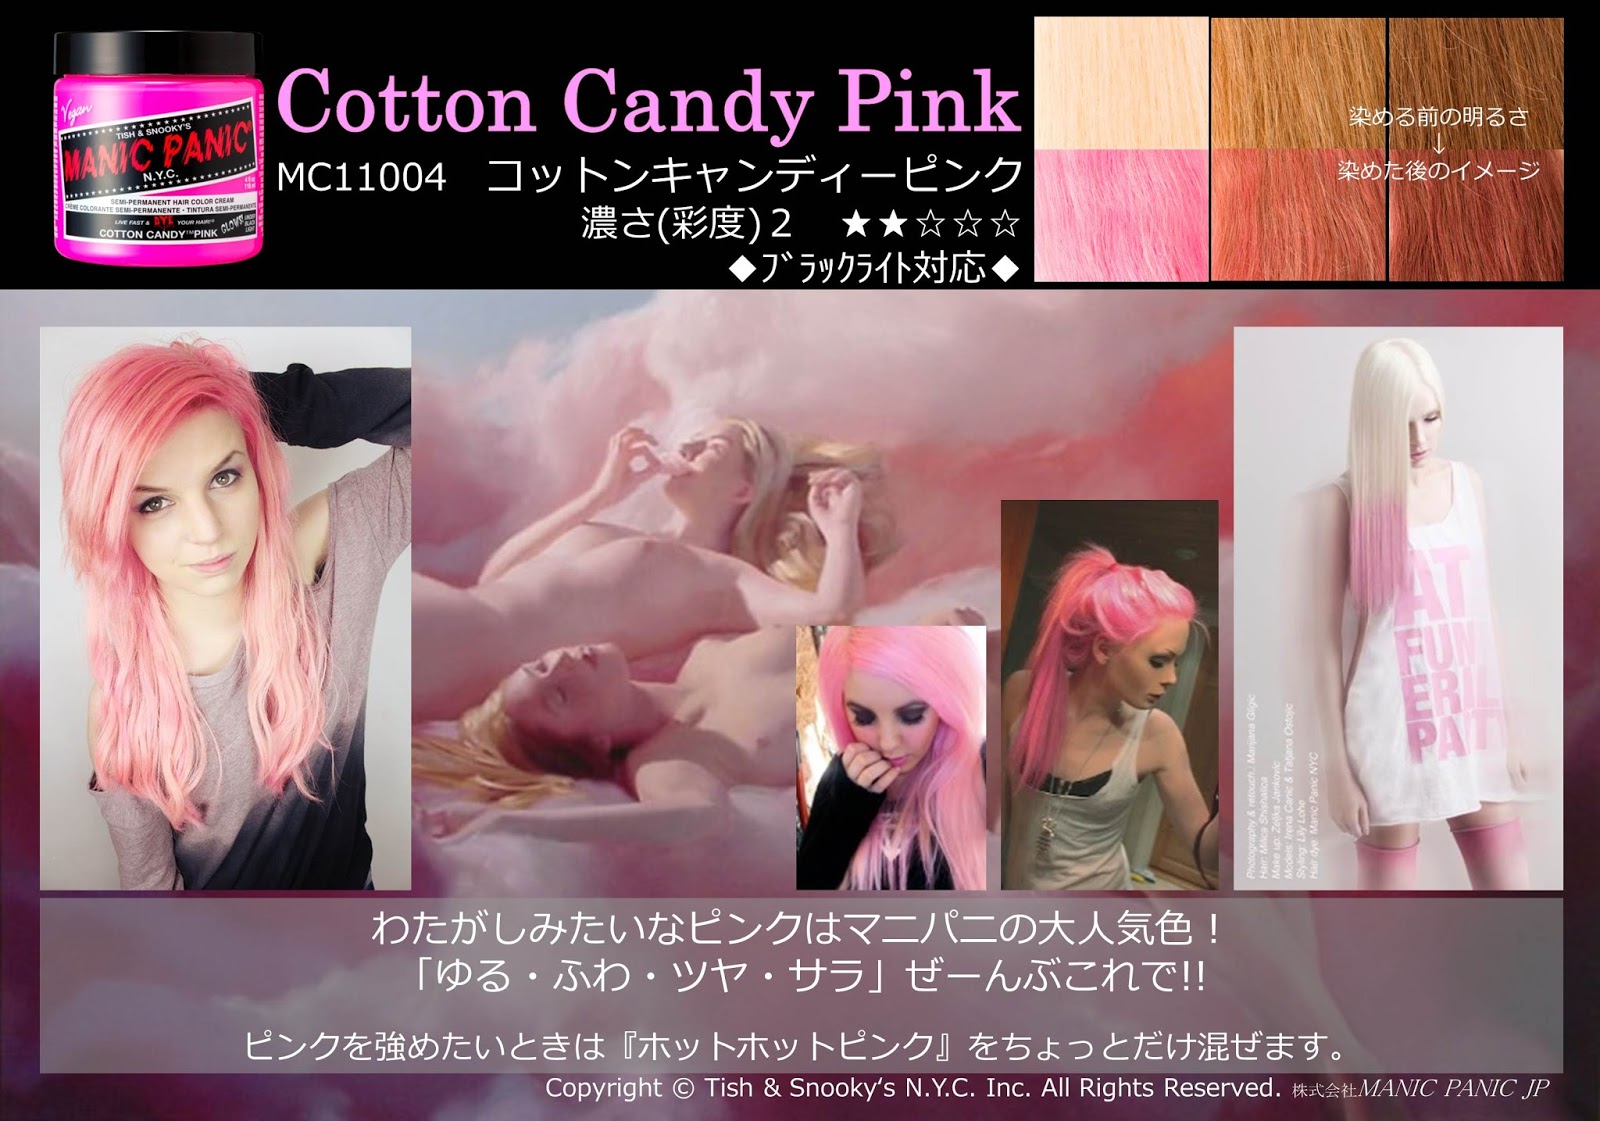 1. Manic Panic Cotton Candy Pink Hair Dye - wide 5